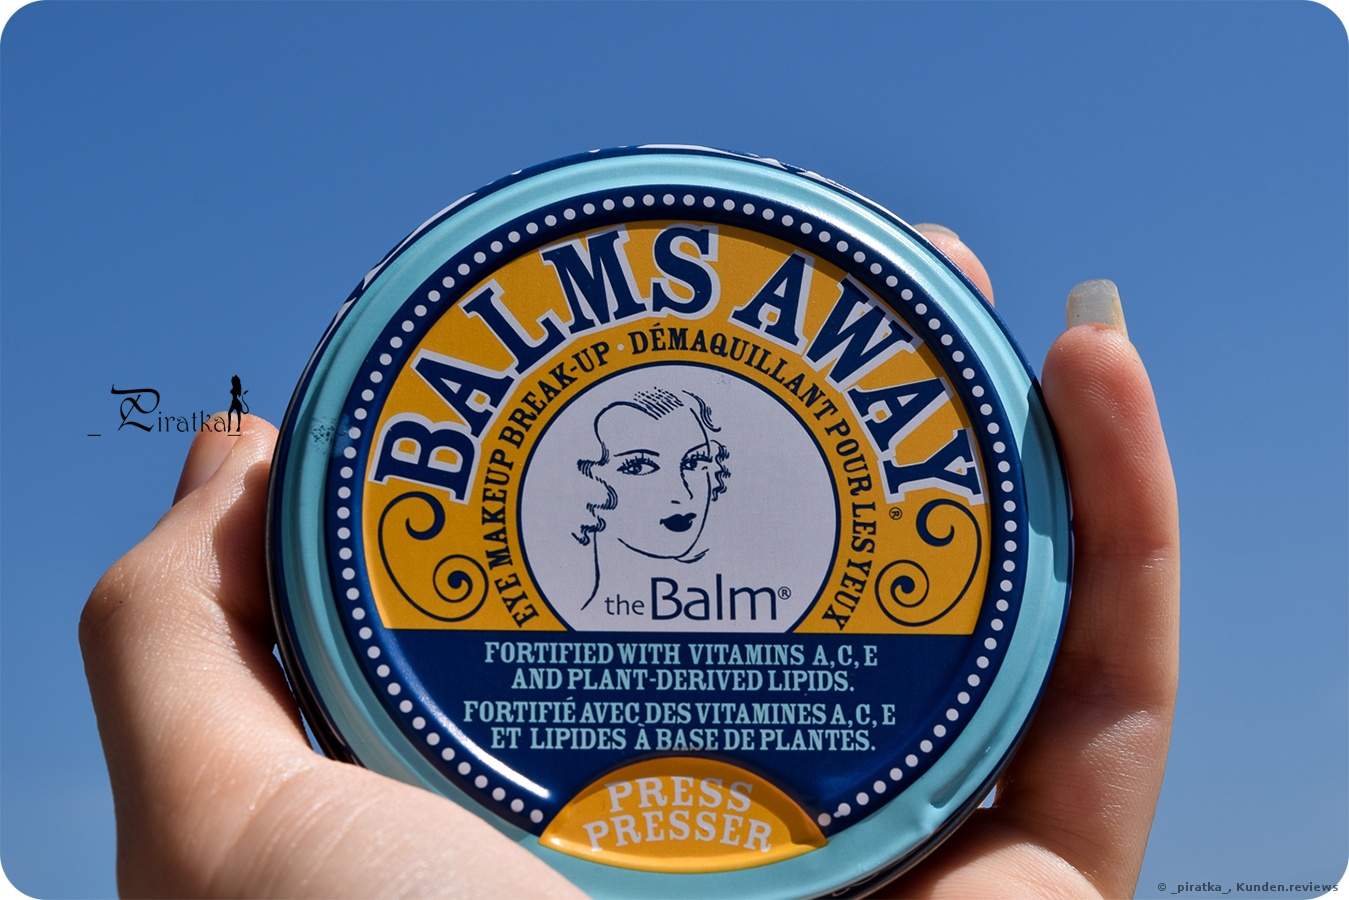 TheBalm Balms Away Makeup-Entferner Foto